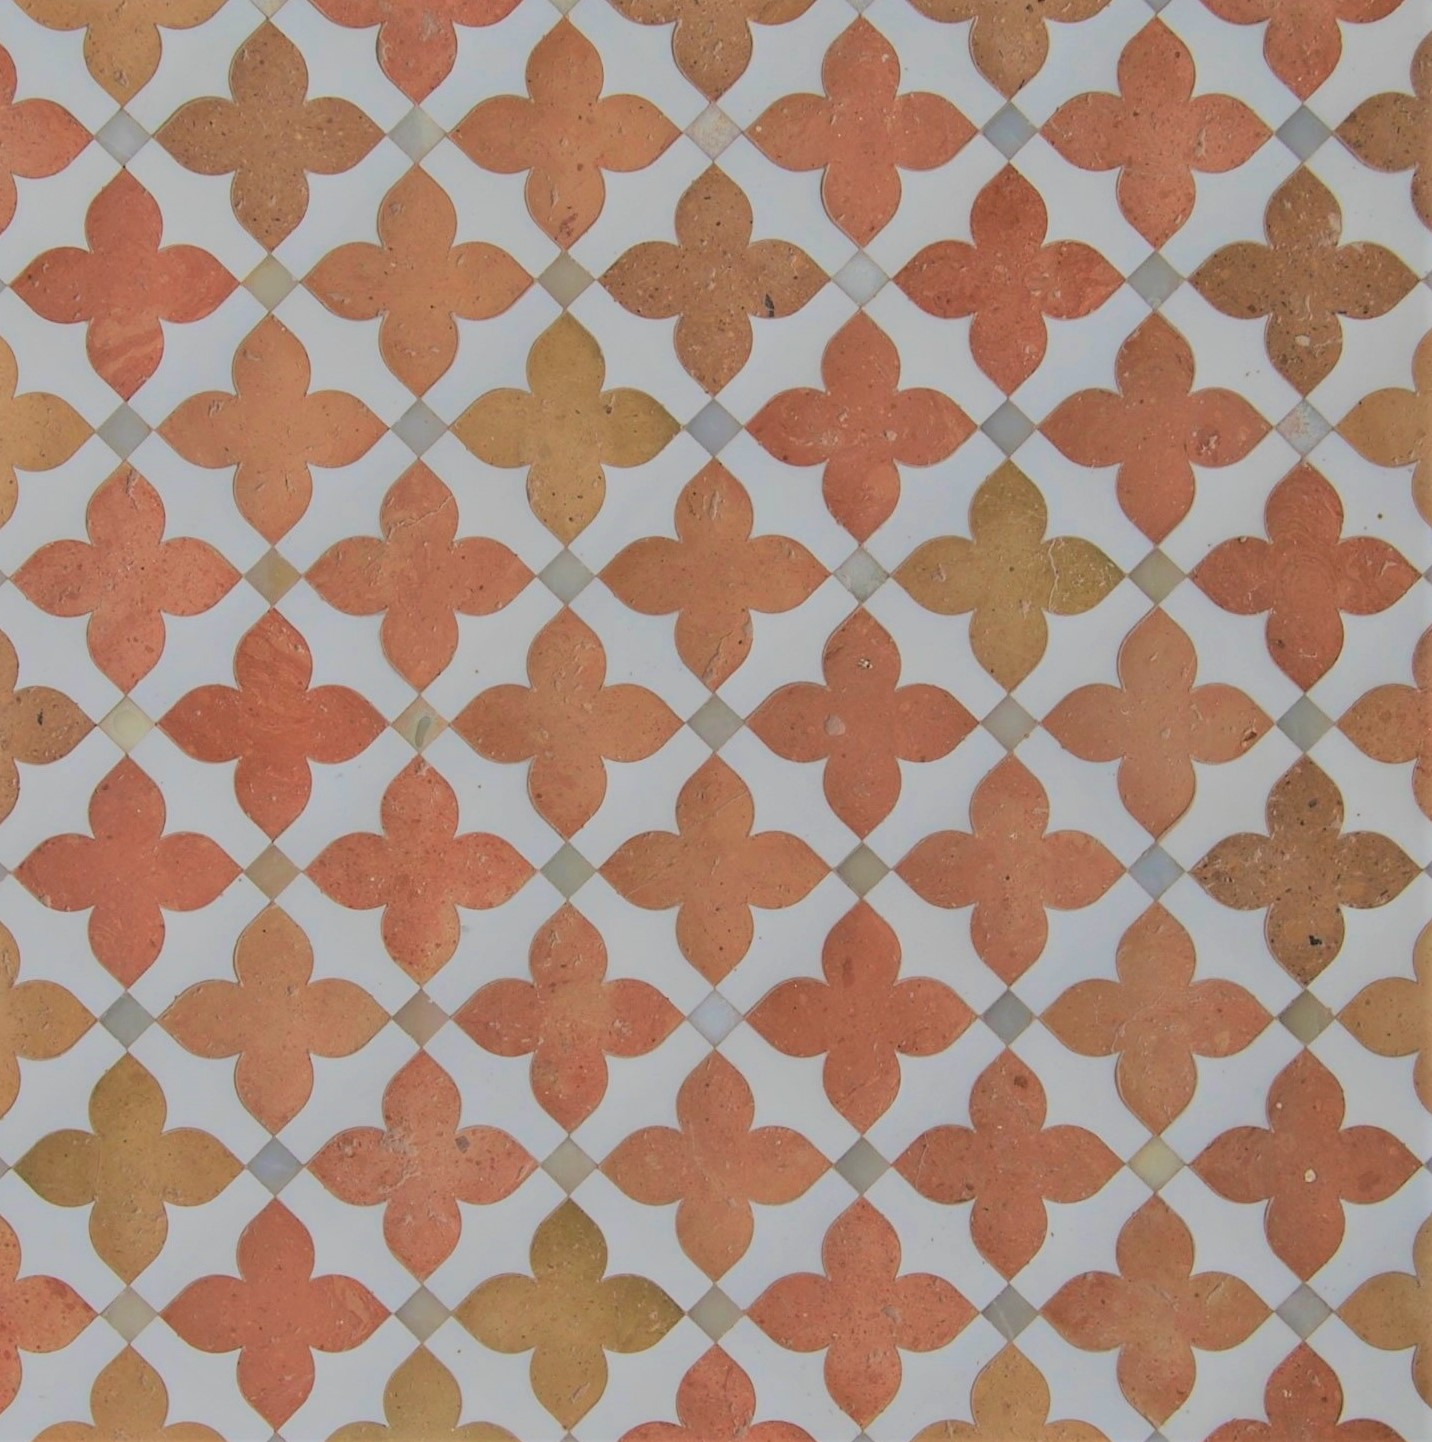 Shop Now AHTV Undulating Surfaces Collection - Fiore Tudor Bianco Onyx Tile  | Terraviva - AHTV | Creative Tile